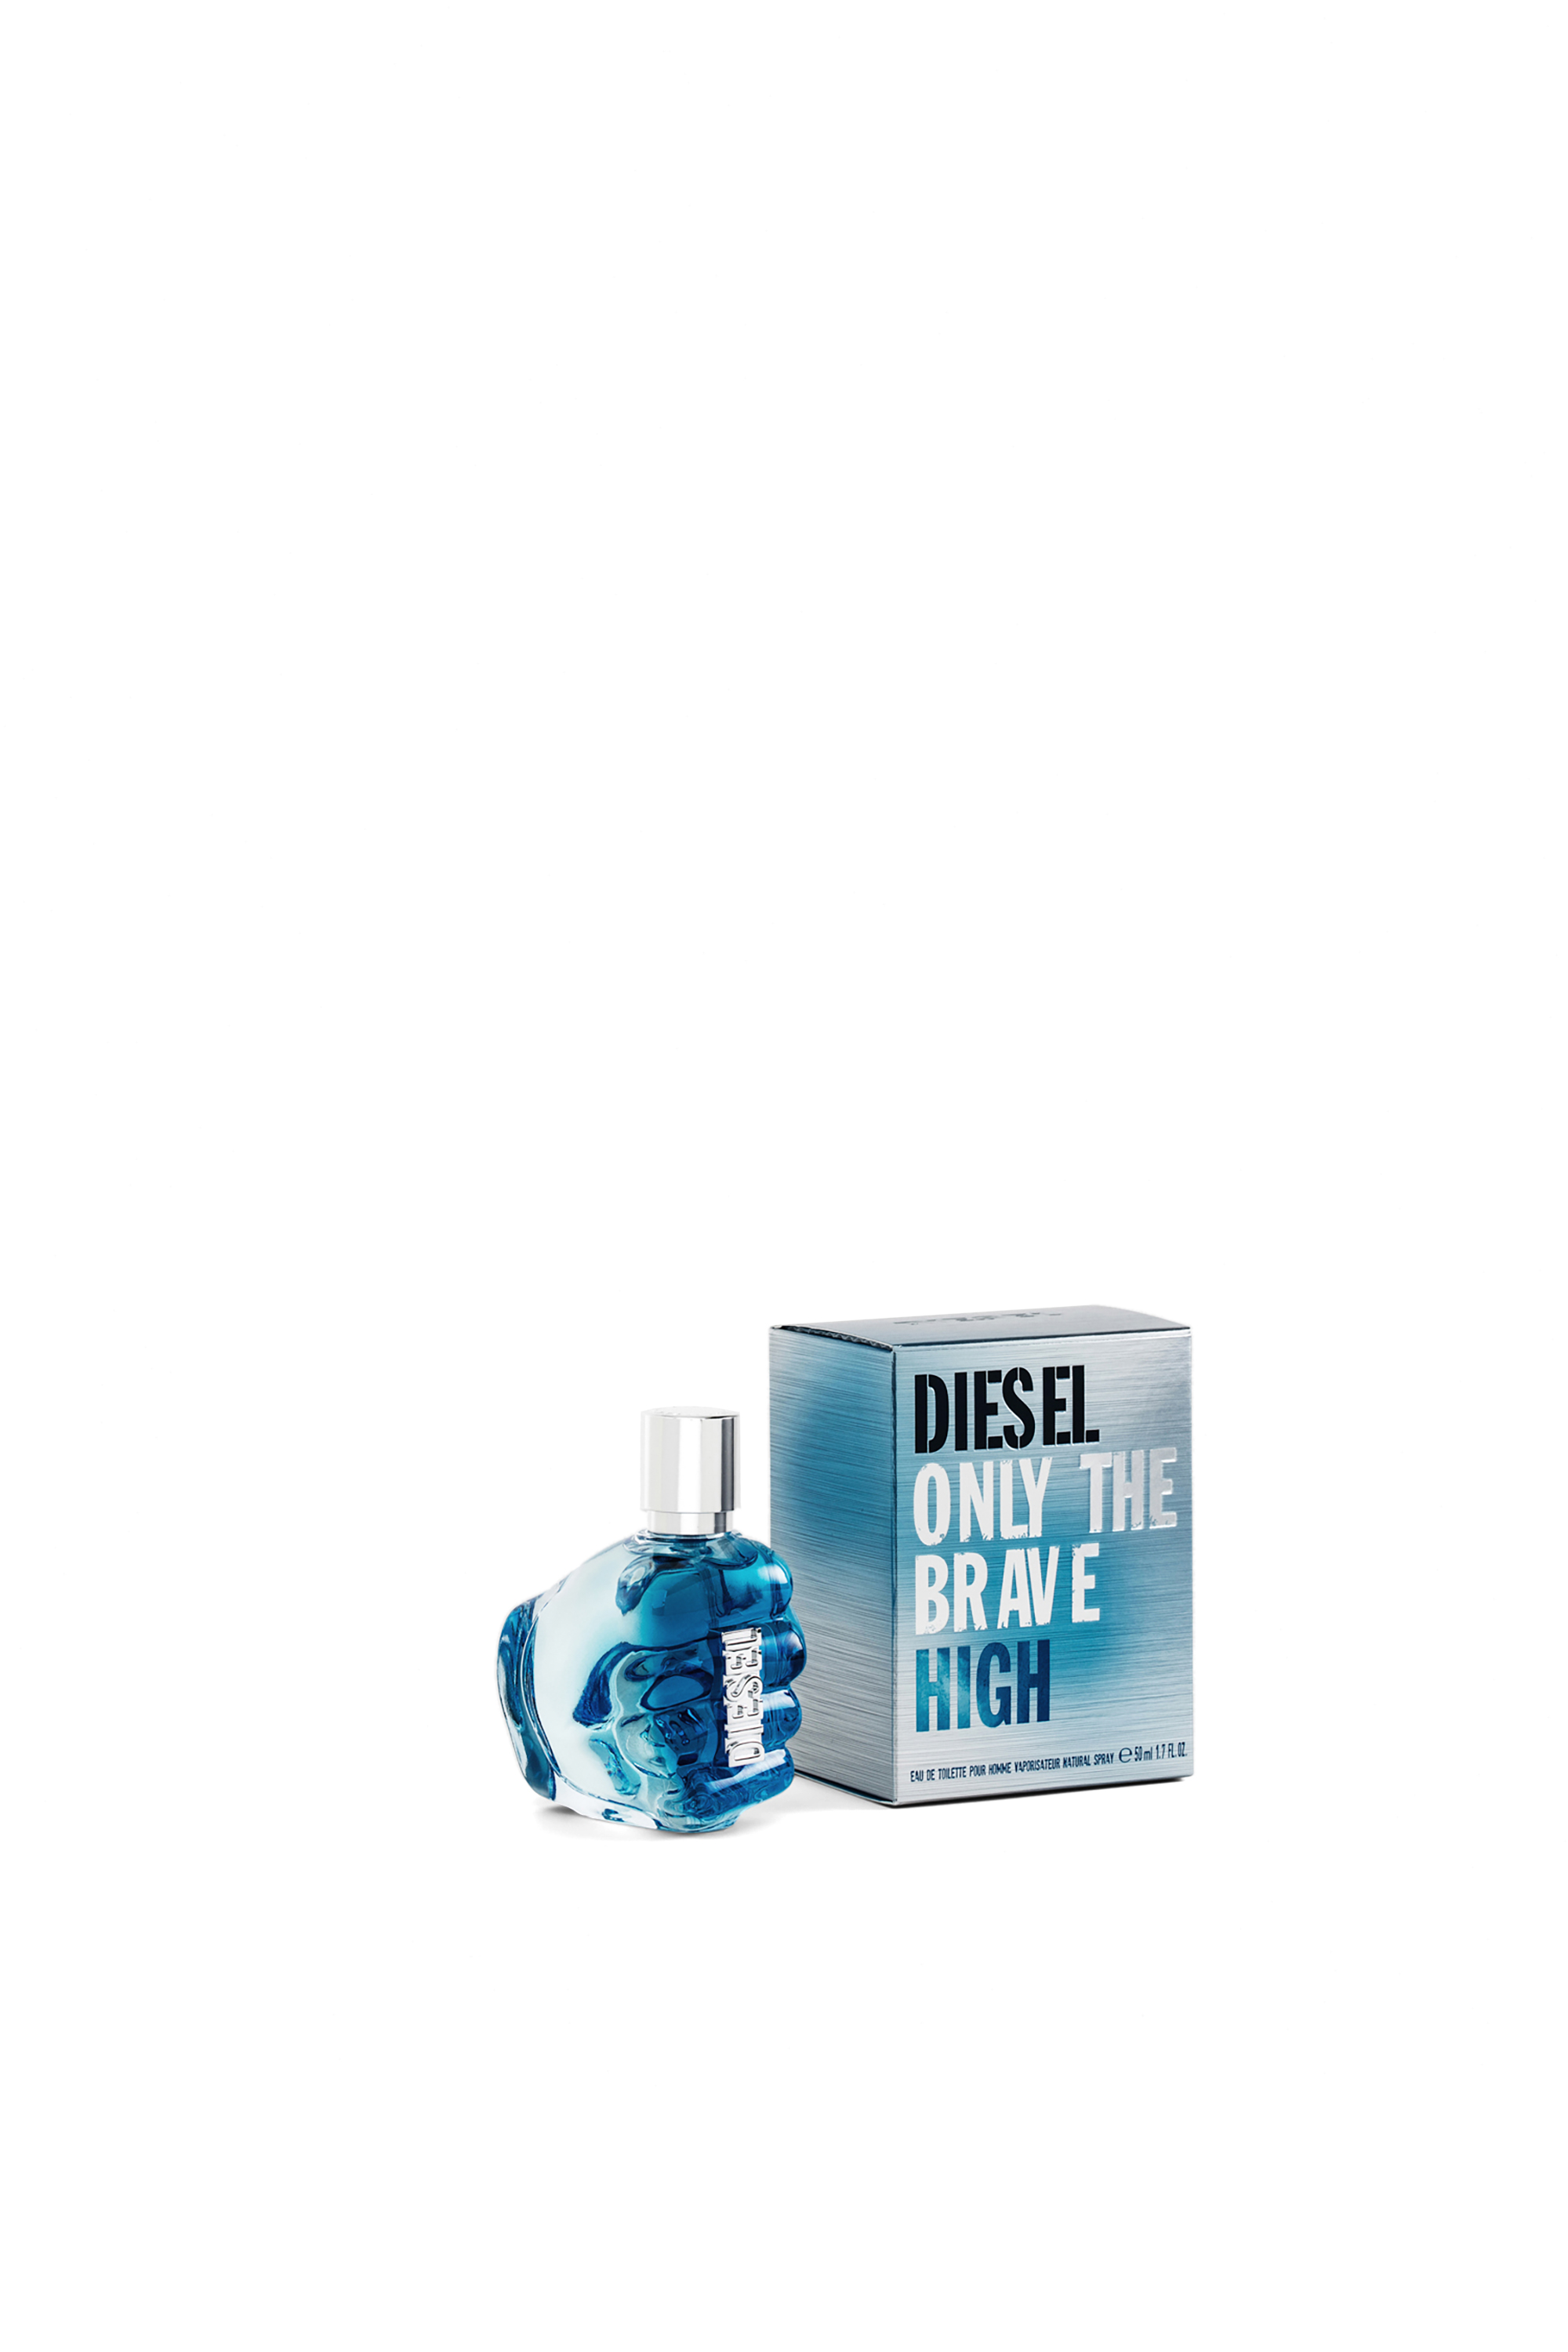 Diesel - ONLY THE BRAVE HIGH  50ML, Blu Chiaro - Image 1